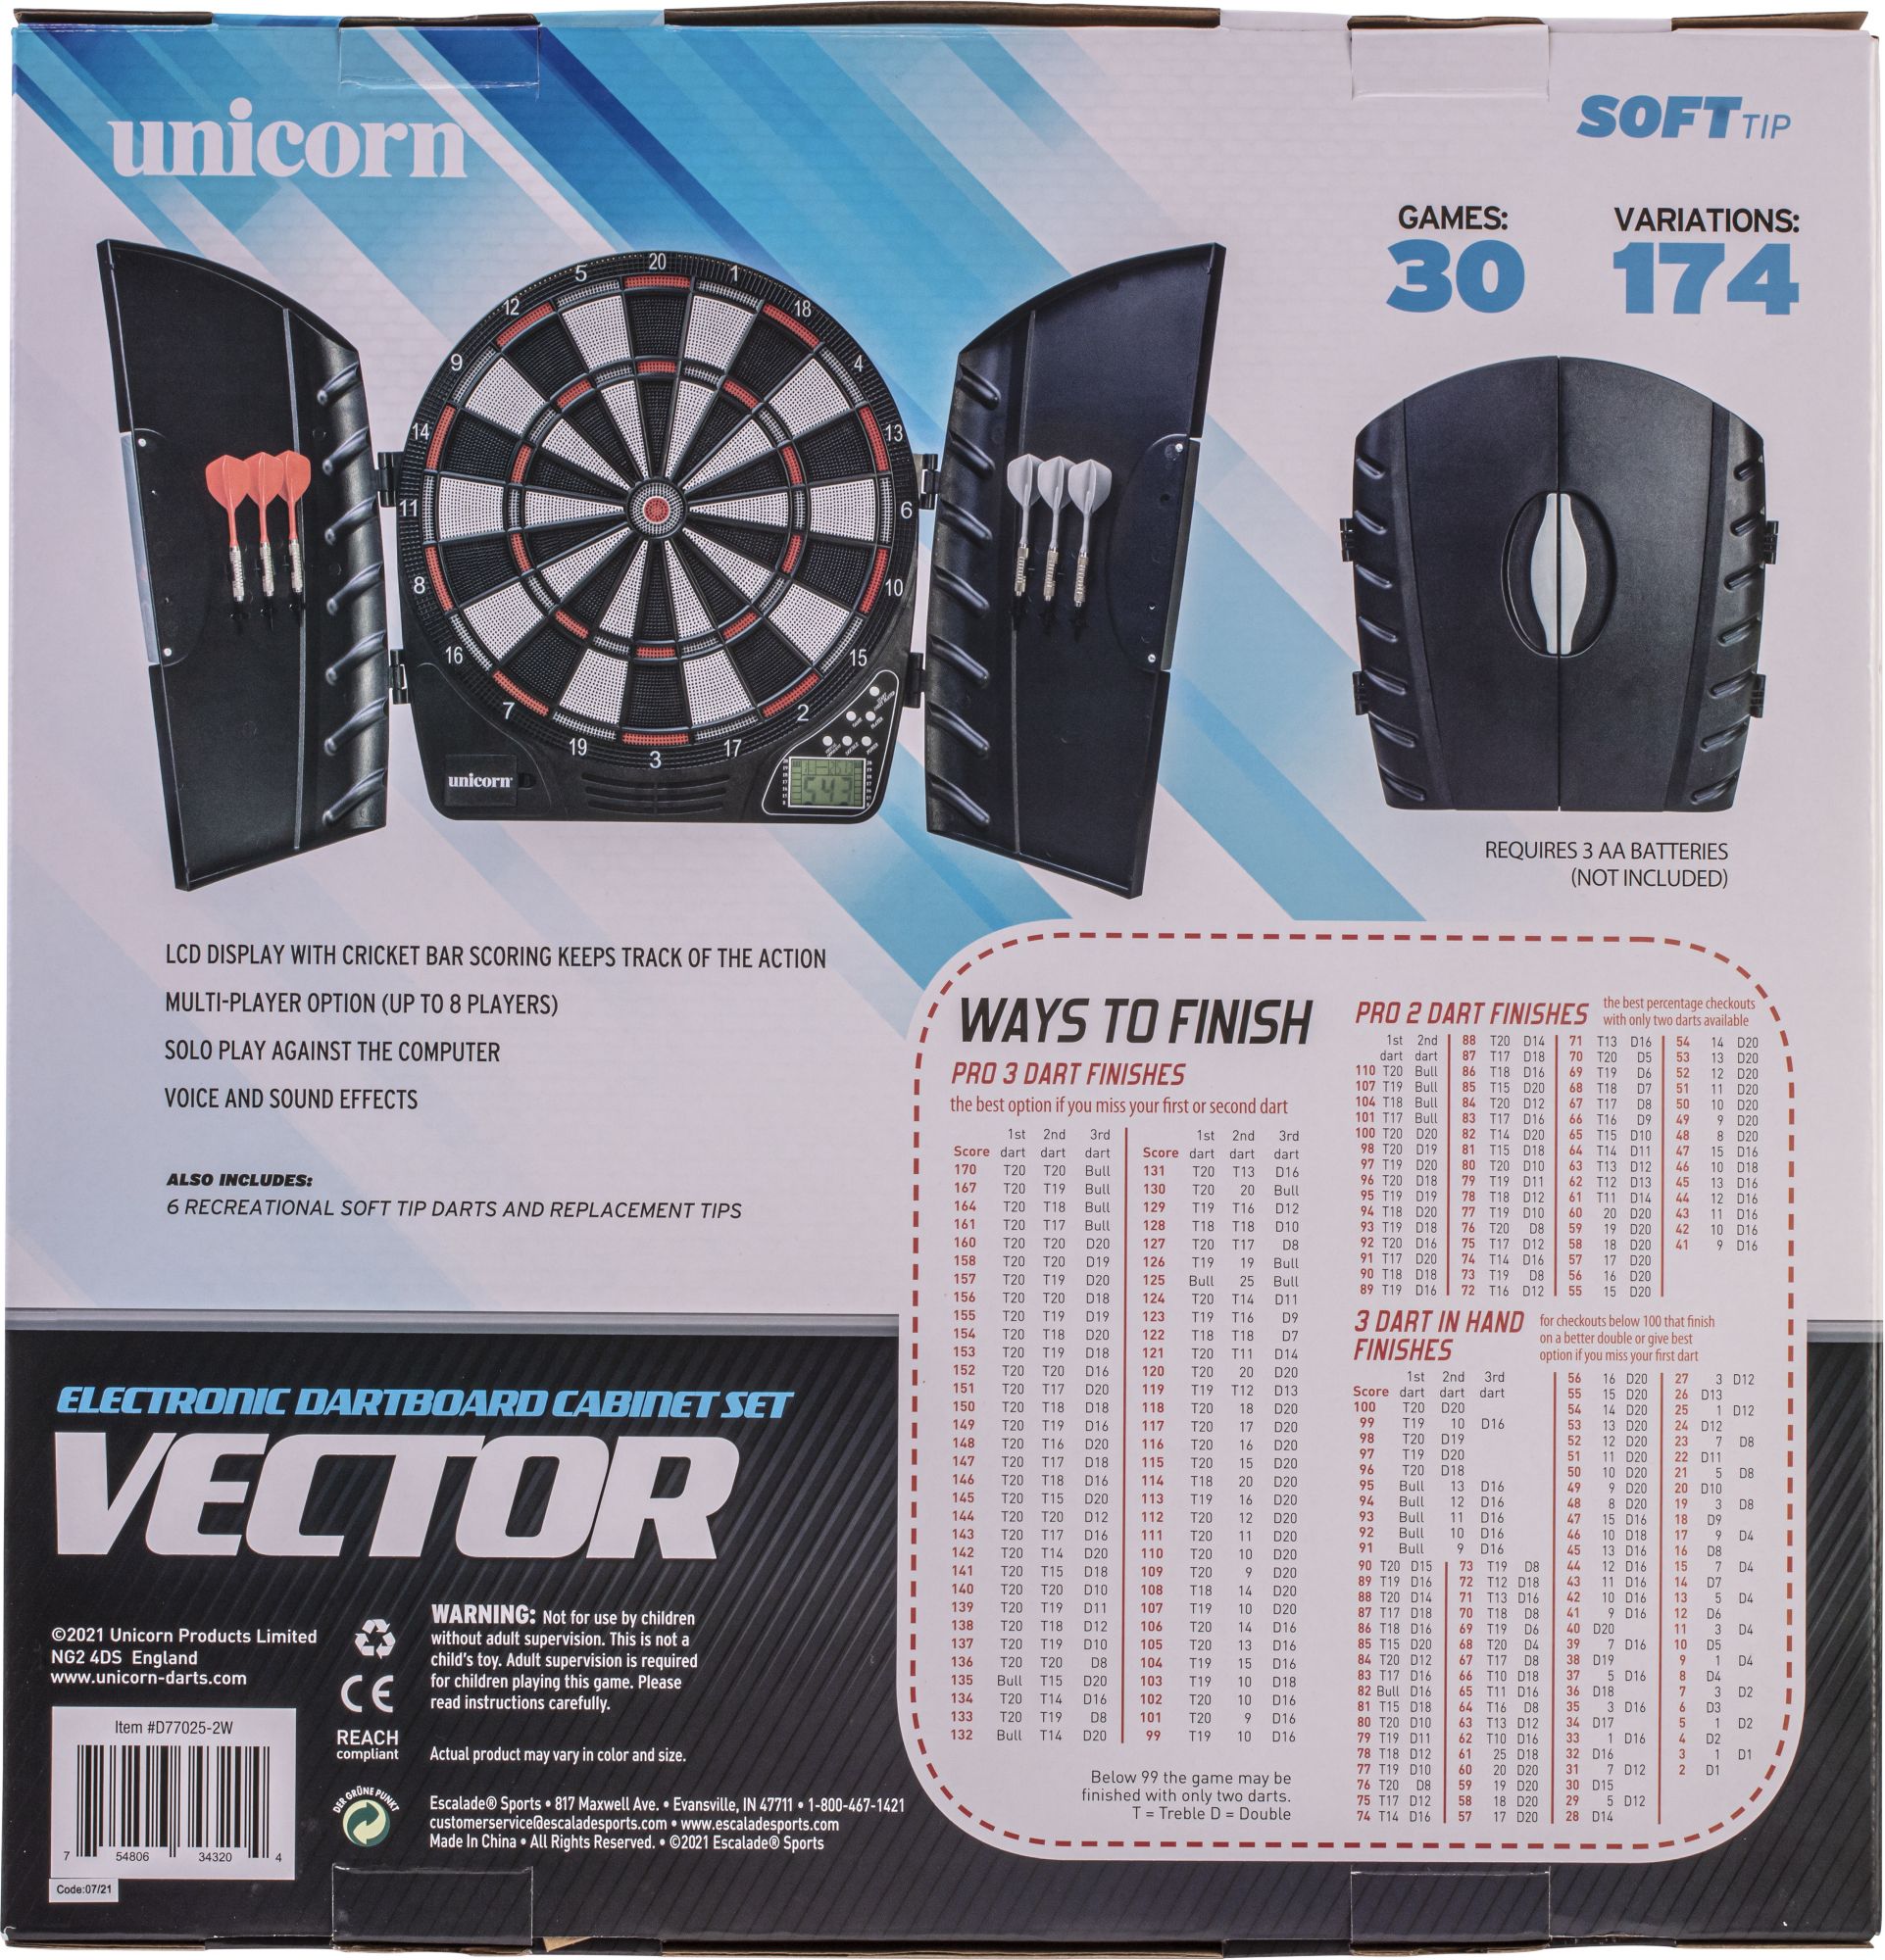 Unicorn Vector Electric Dartboard